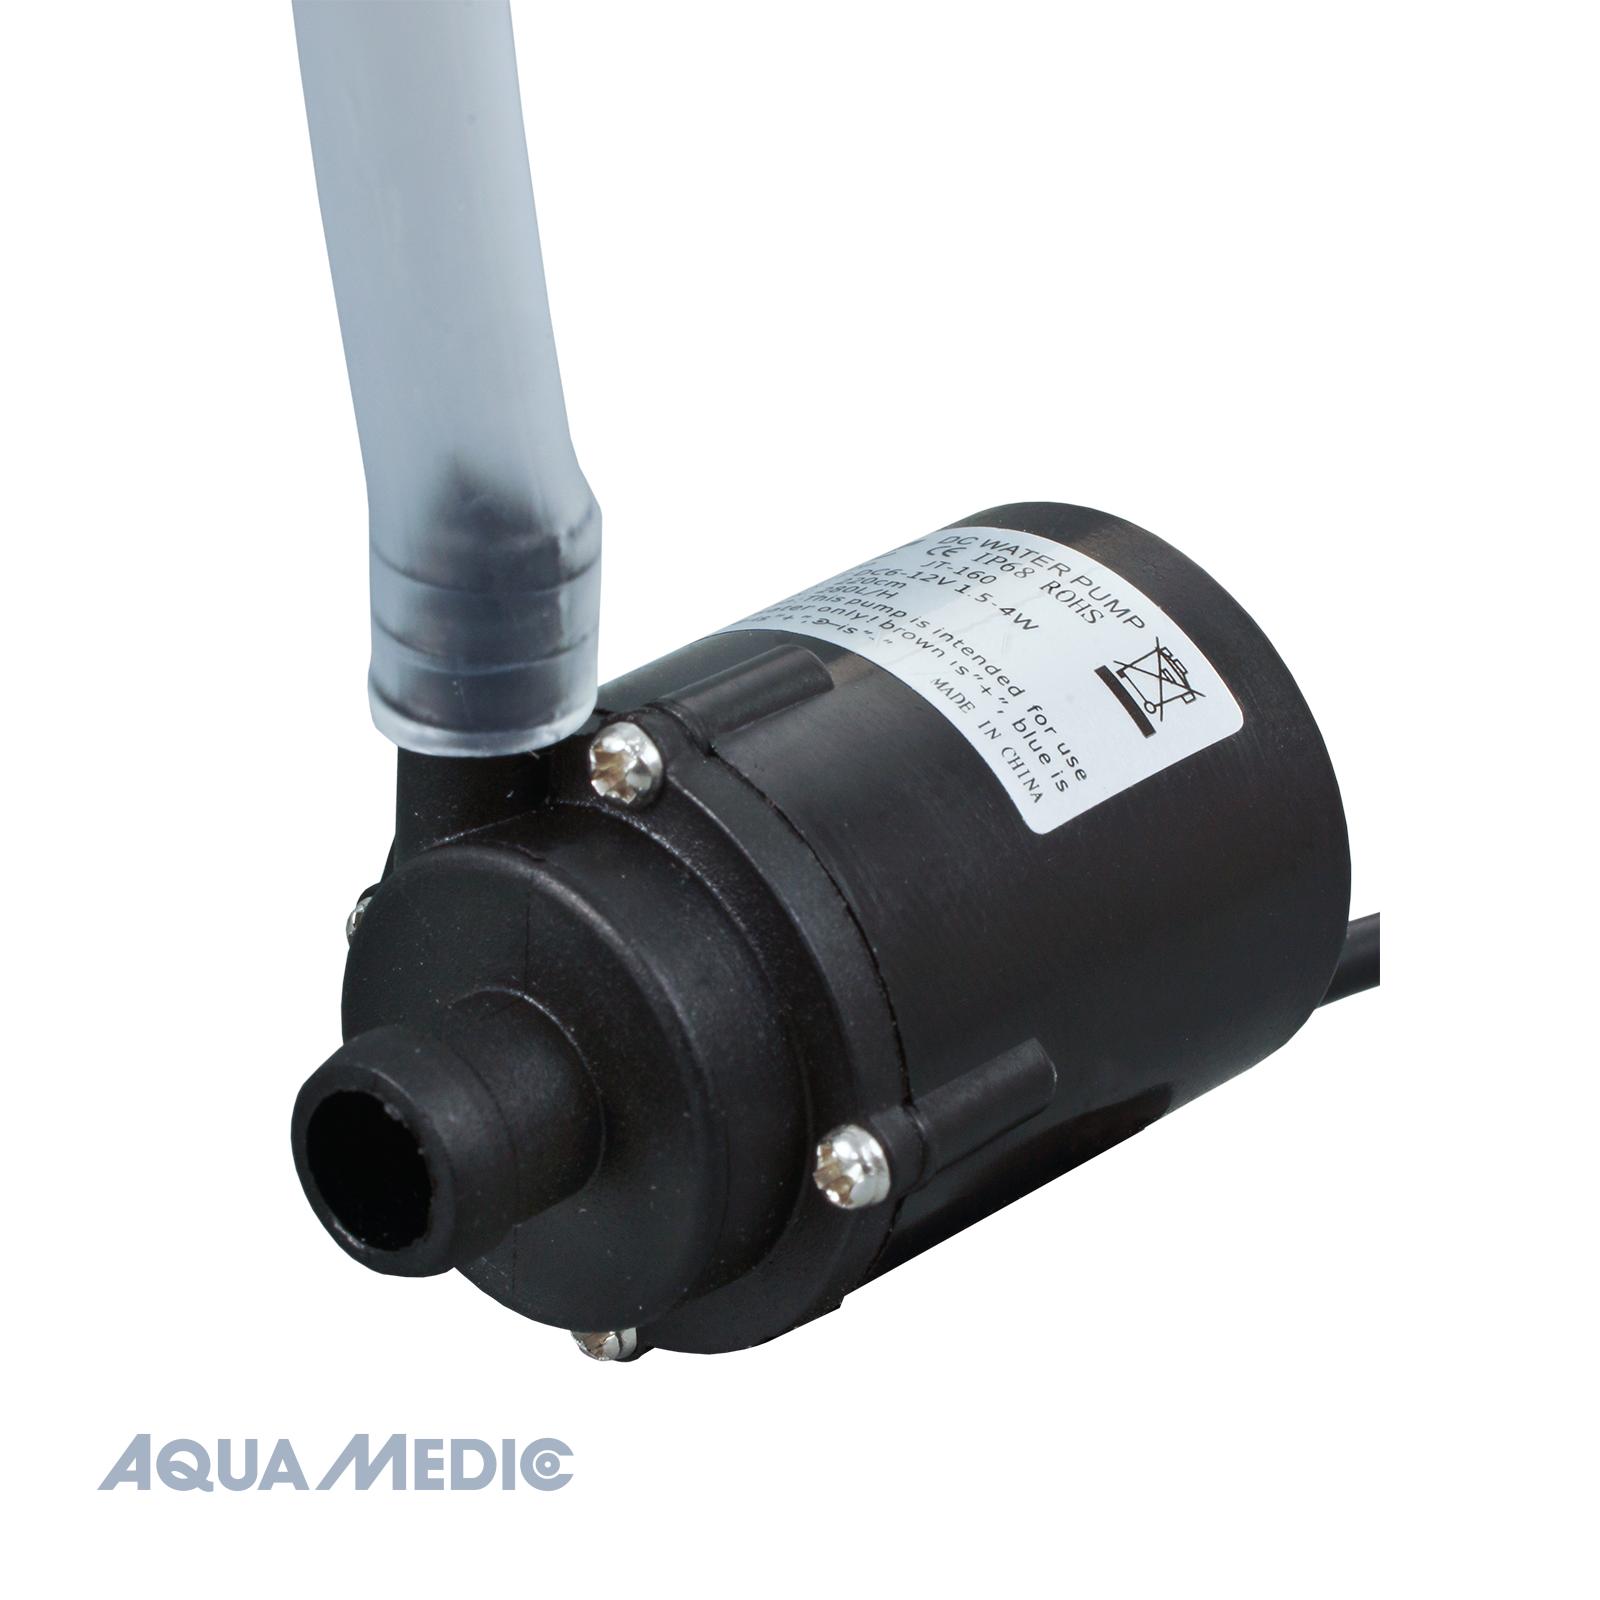 Автодолив для аквариума Aqua Medic Refill System easy 54356